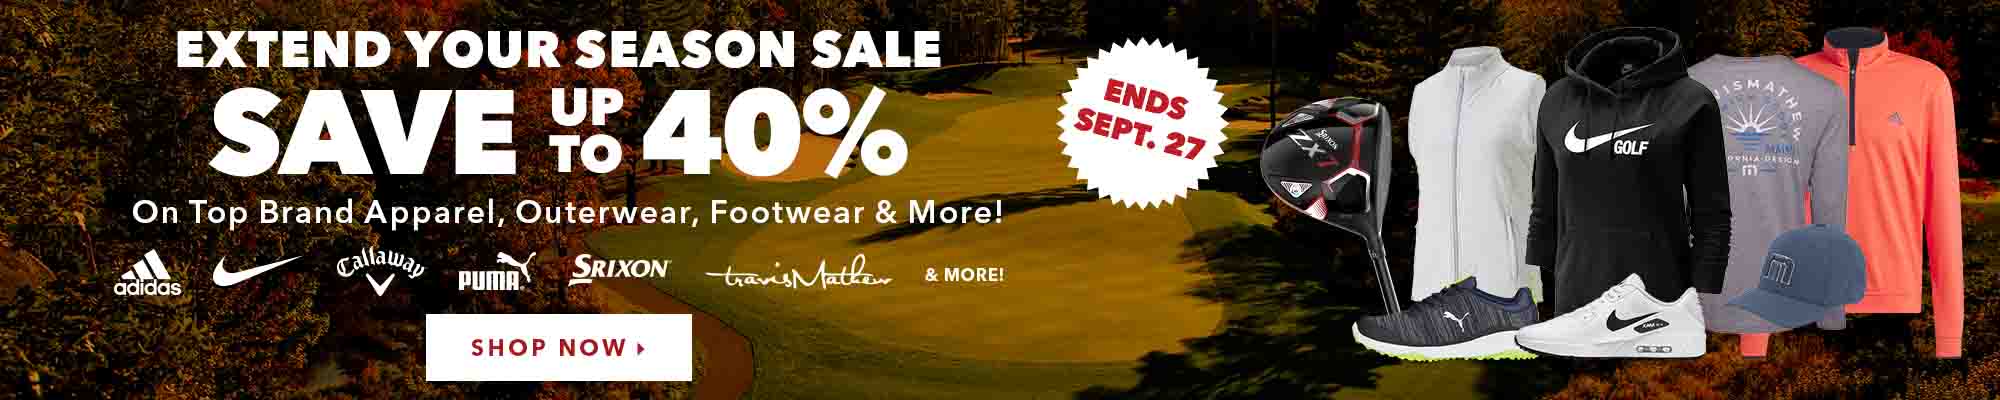 Extend Your Season Sale- Save on Fall Golf Ready Gear!